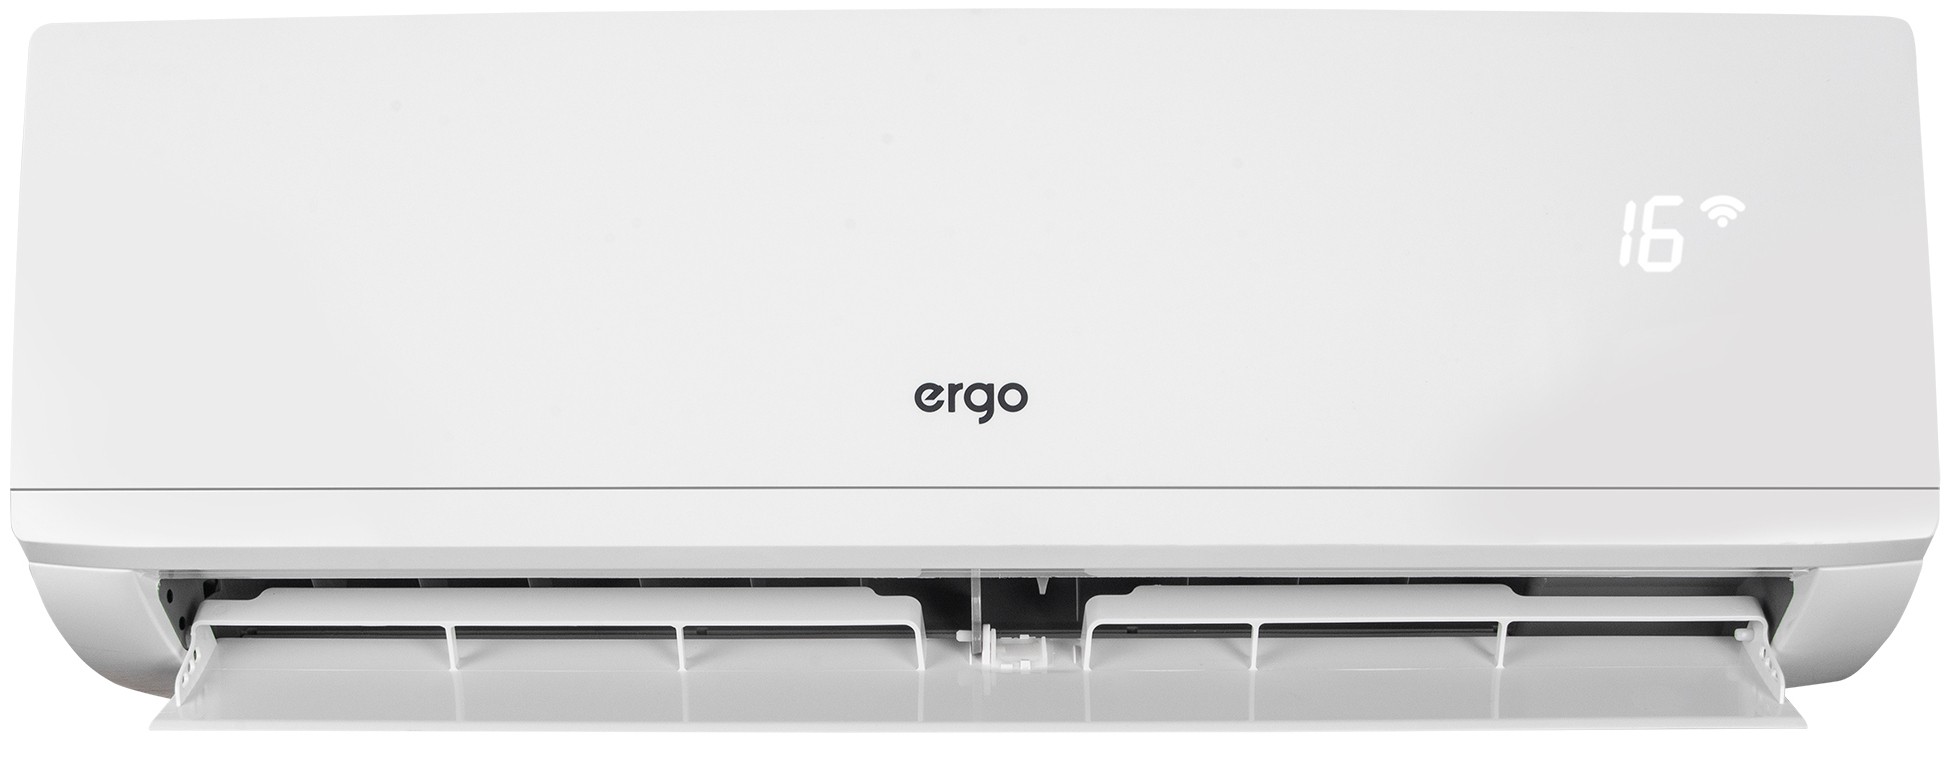 карточка товара Ergo ACI 1252 CHW - фото 16